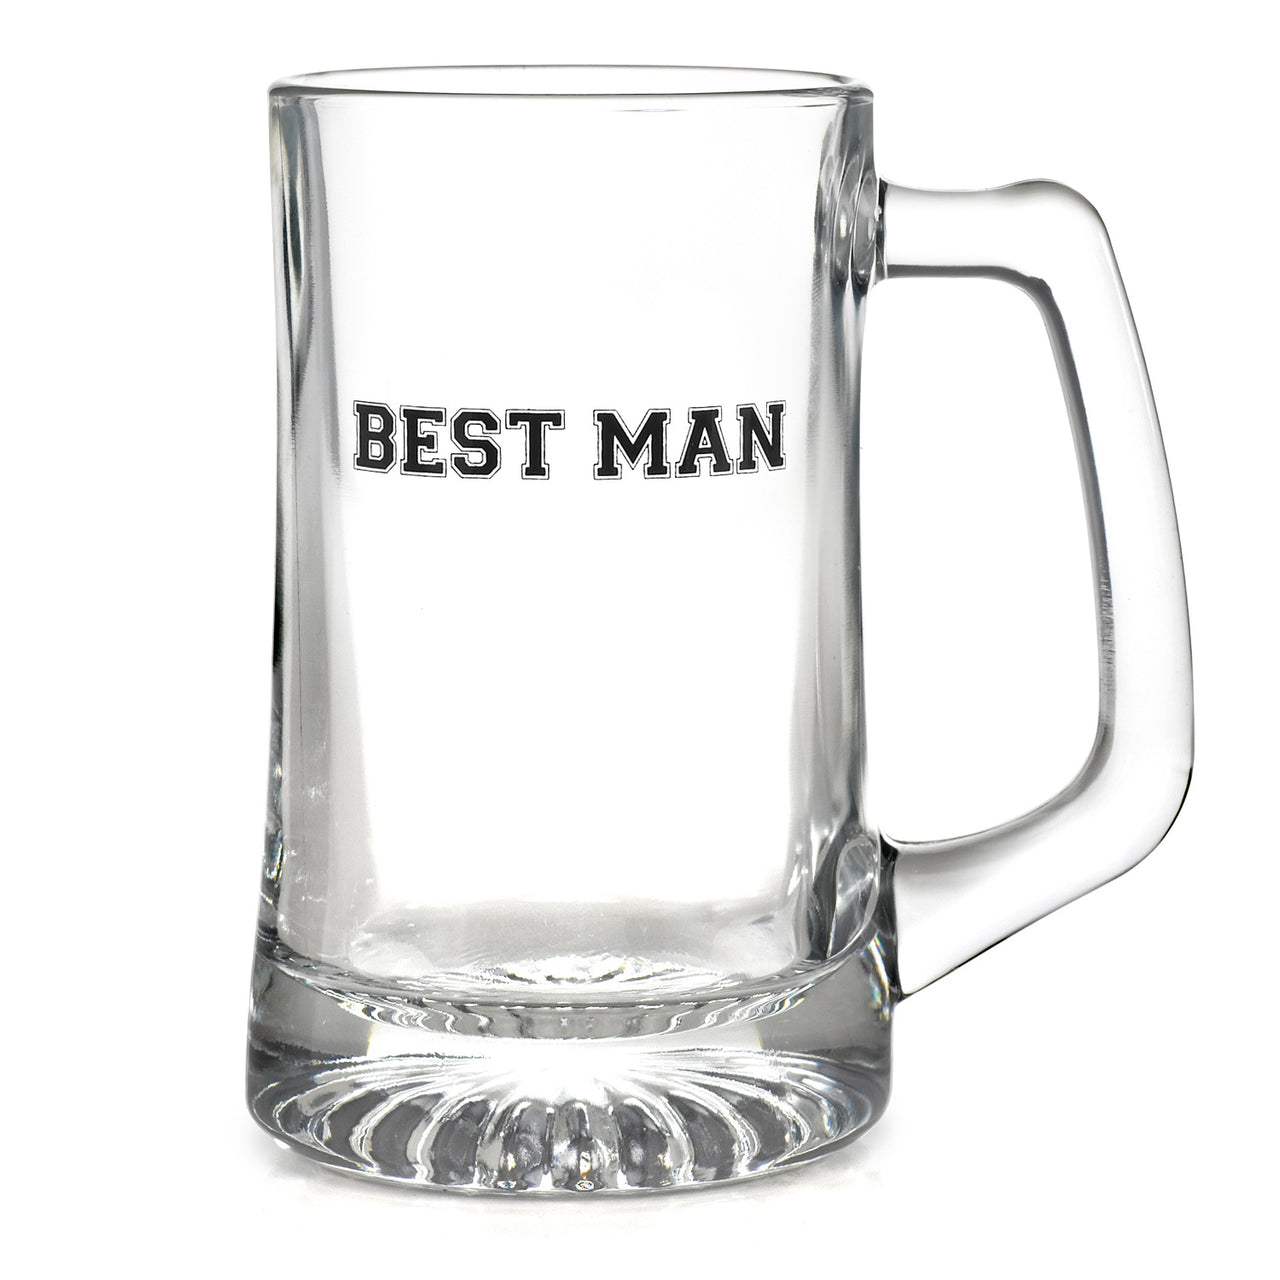 Best Man Mug - Main Image | My Wedding Favors